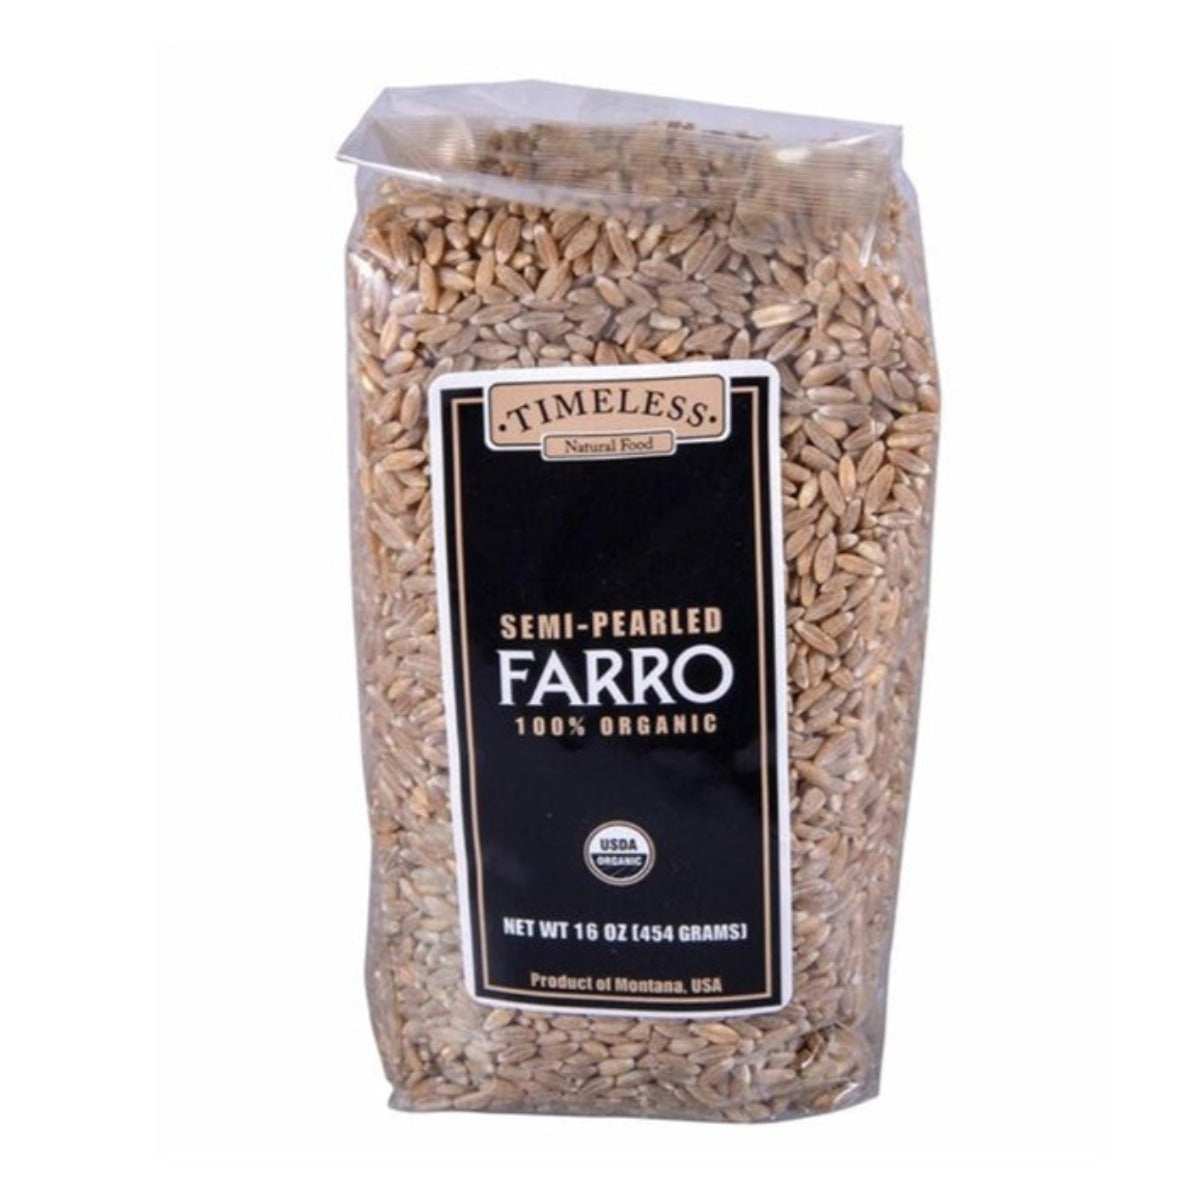 Farro - Semi-Pearled - Organic - Timeless Natural Food